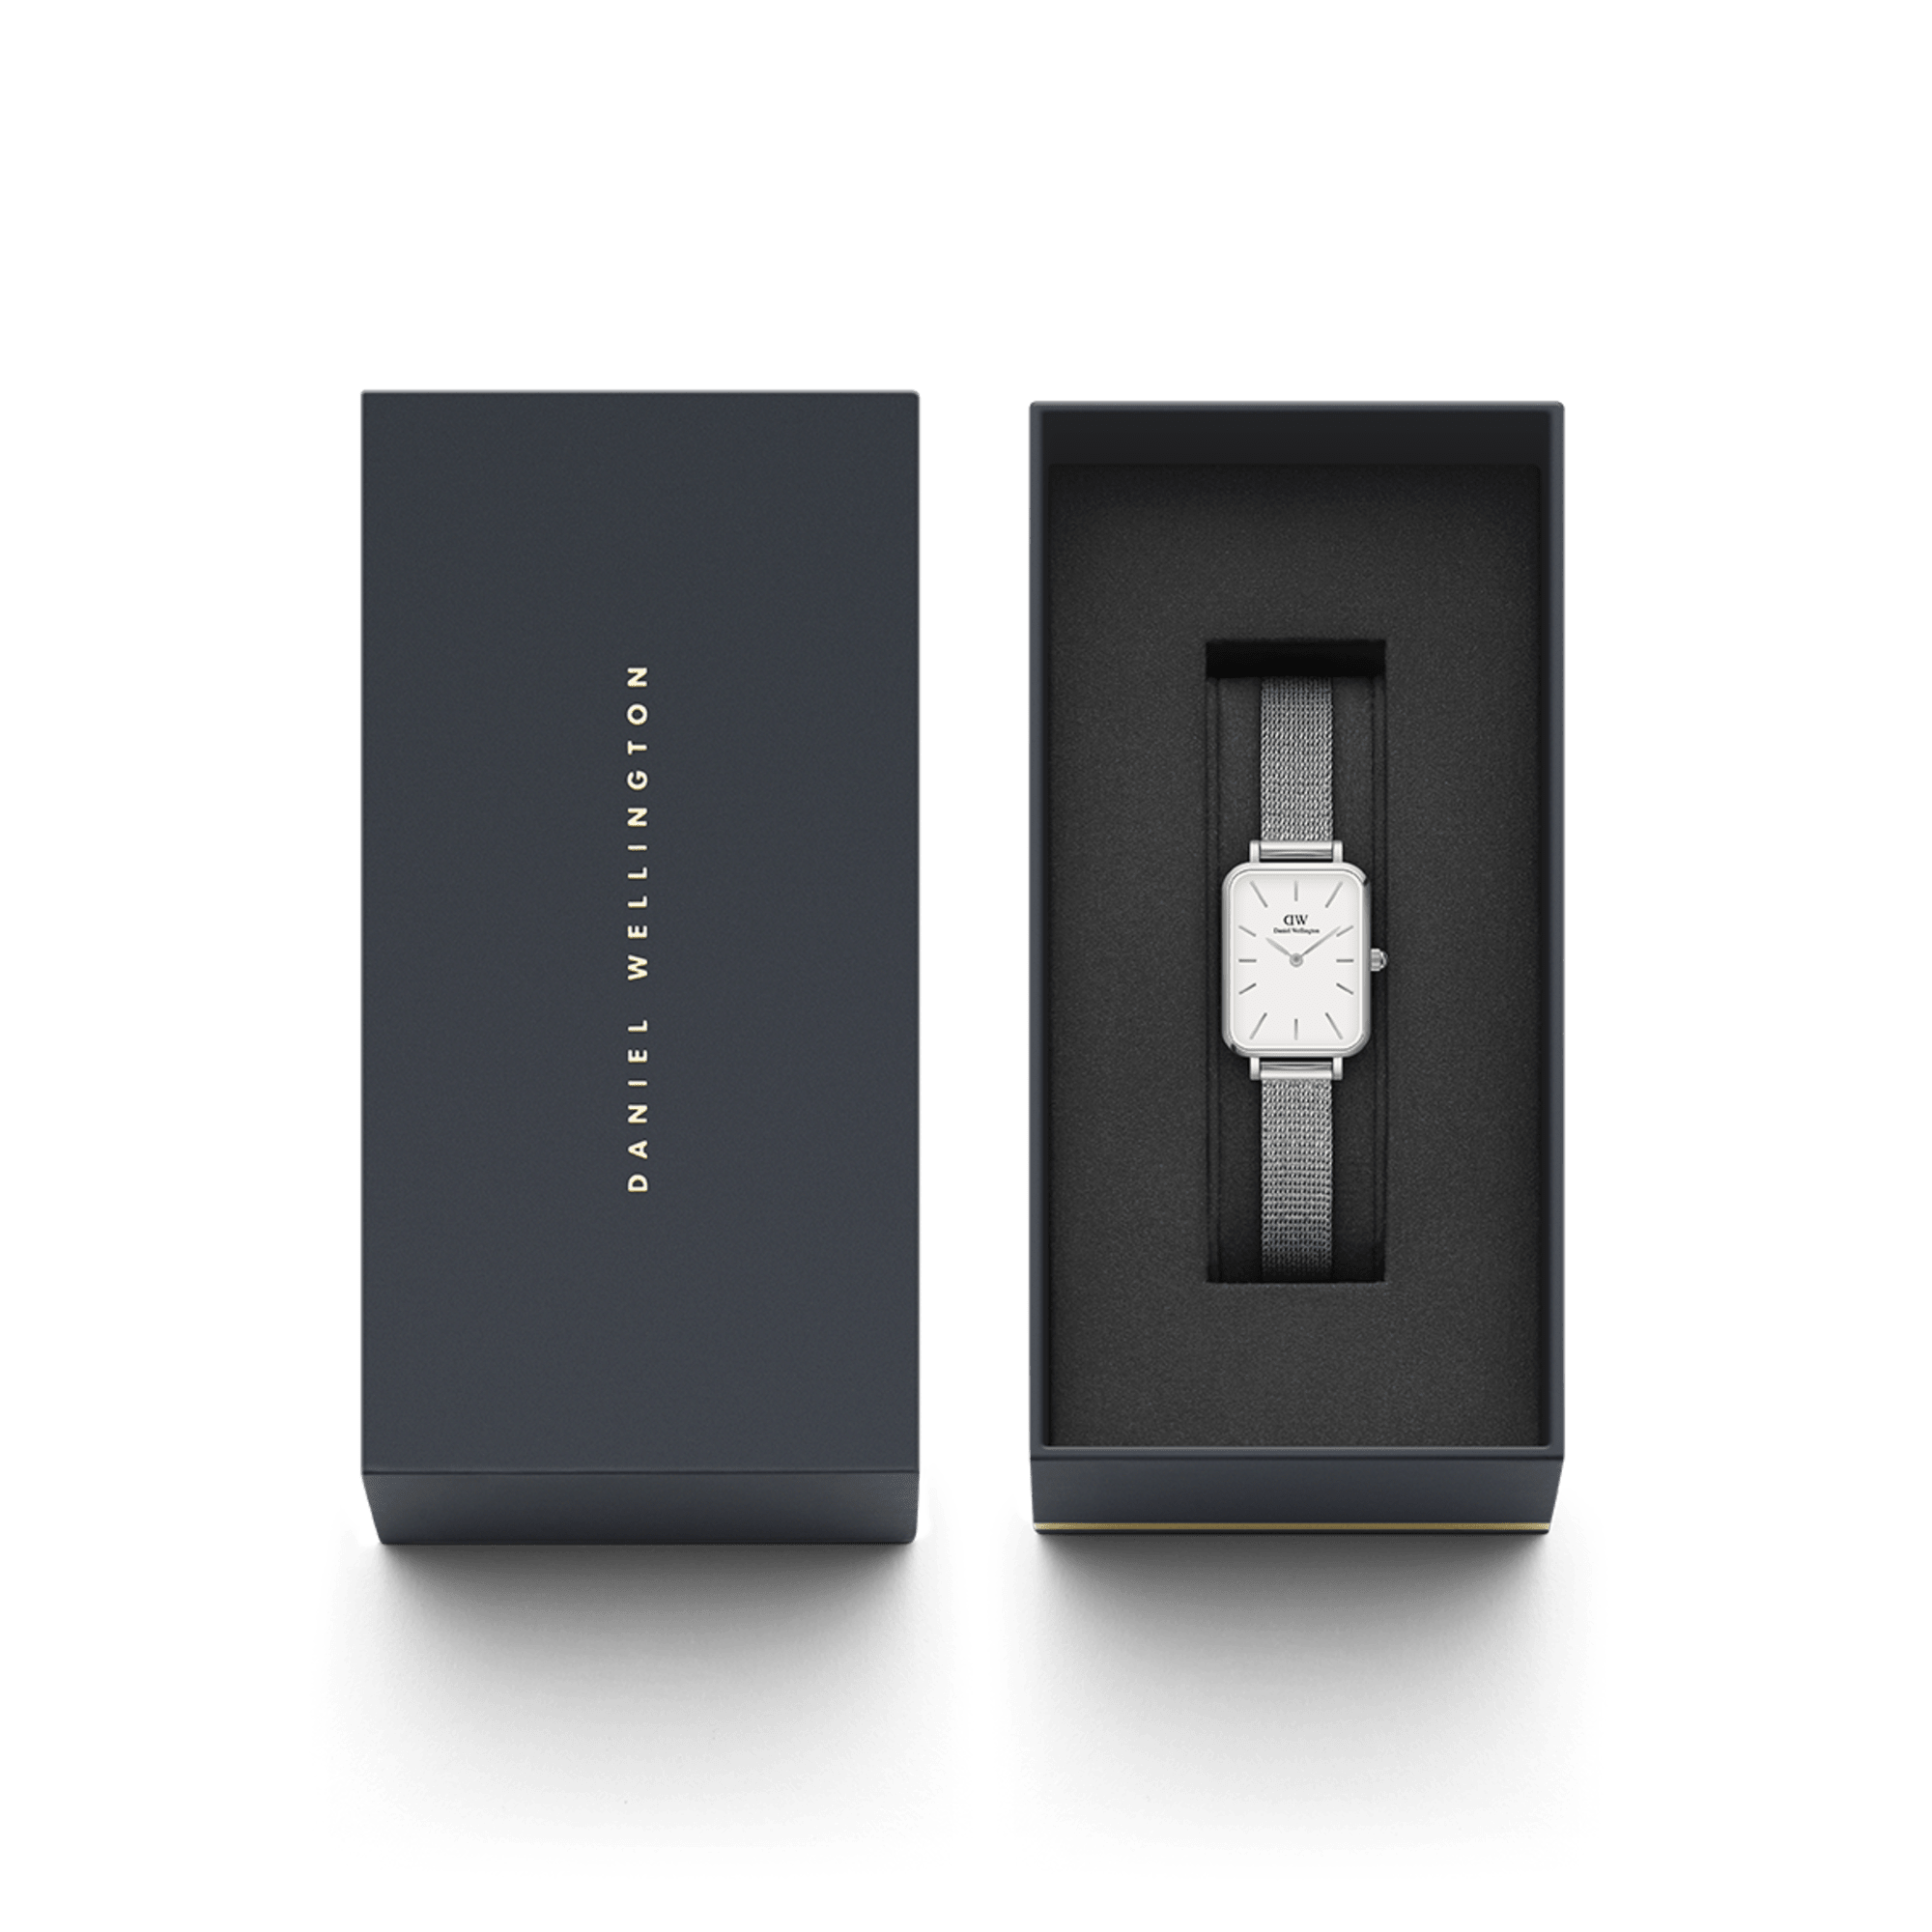 Daniel Wellington Quadro 20X26 Pressed Sterling Silver & White Watch